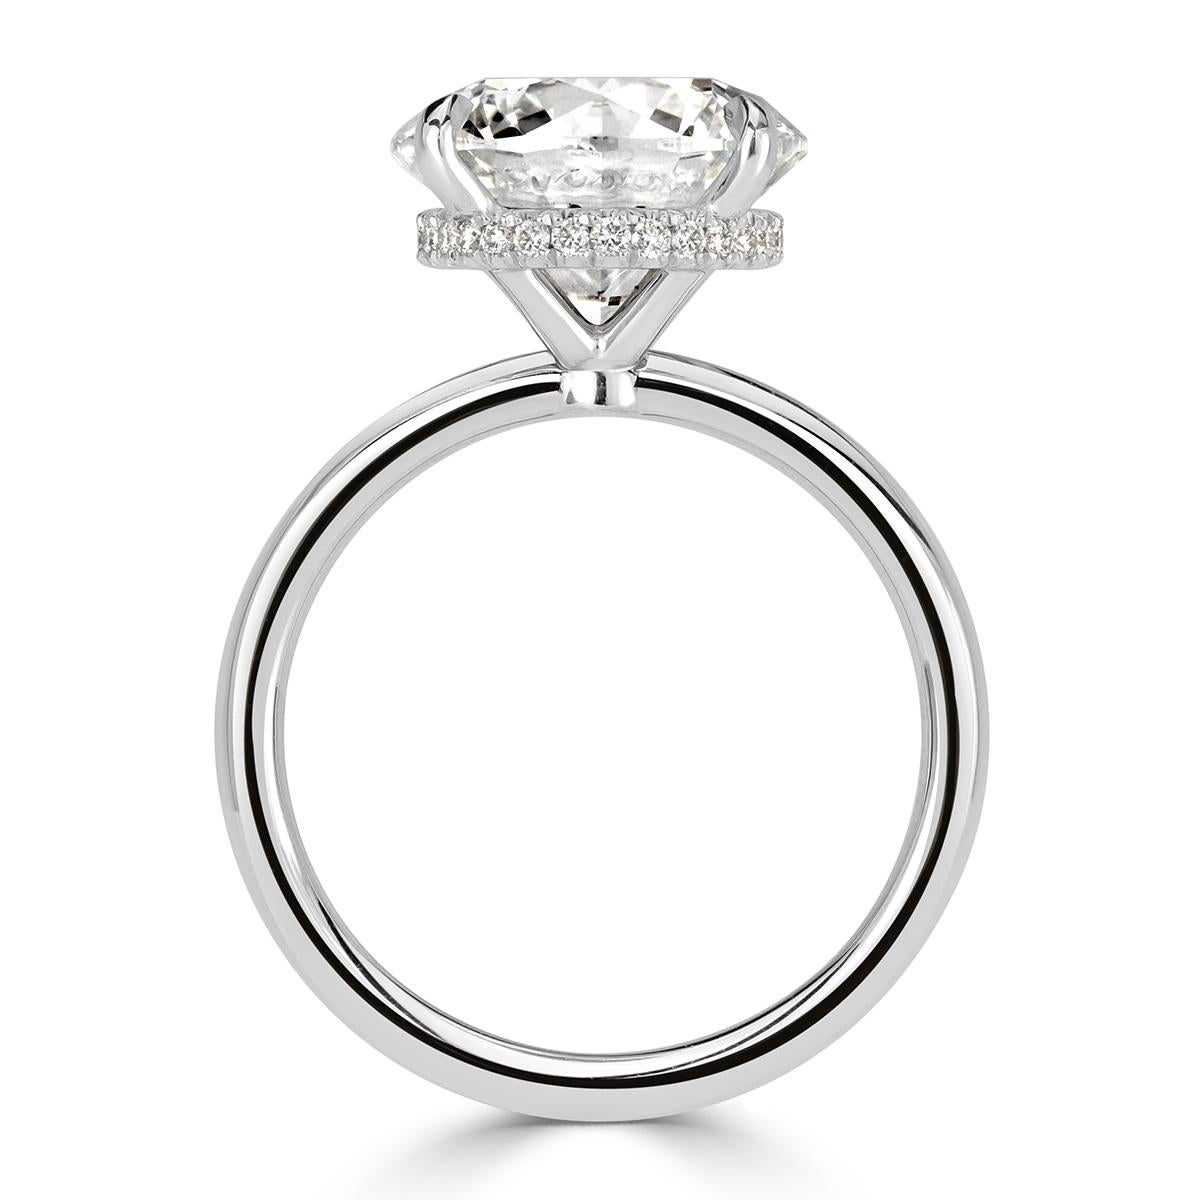 Women's Mark Broumand 5.19 Carat Round Brilliant Cut Diamond Engagement Ring